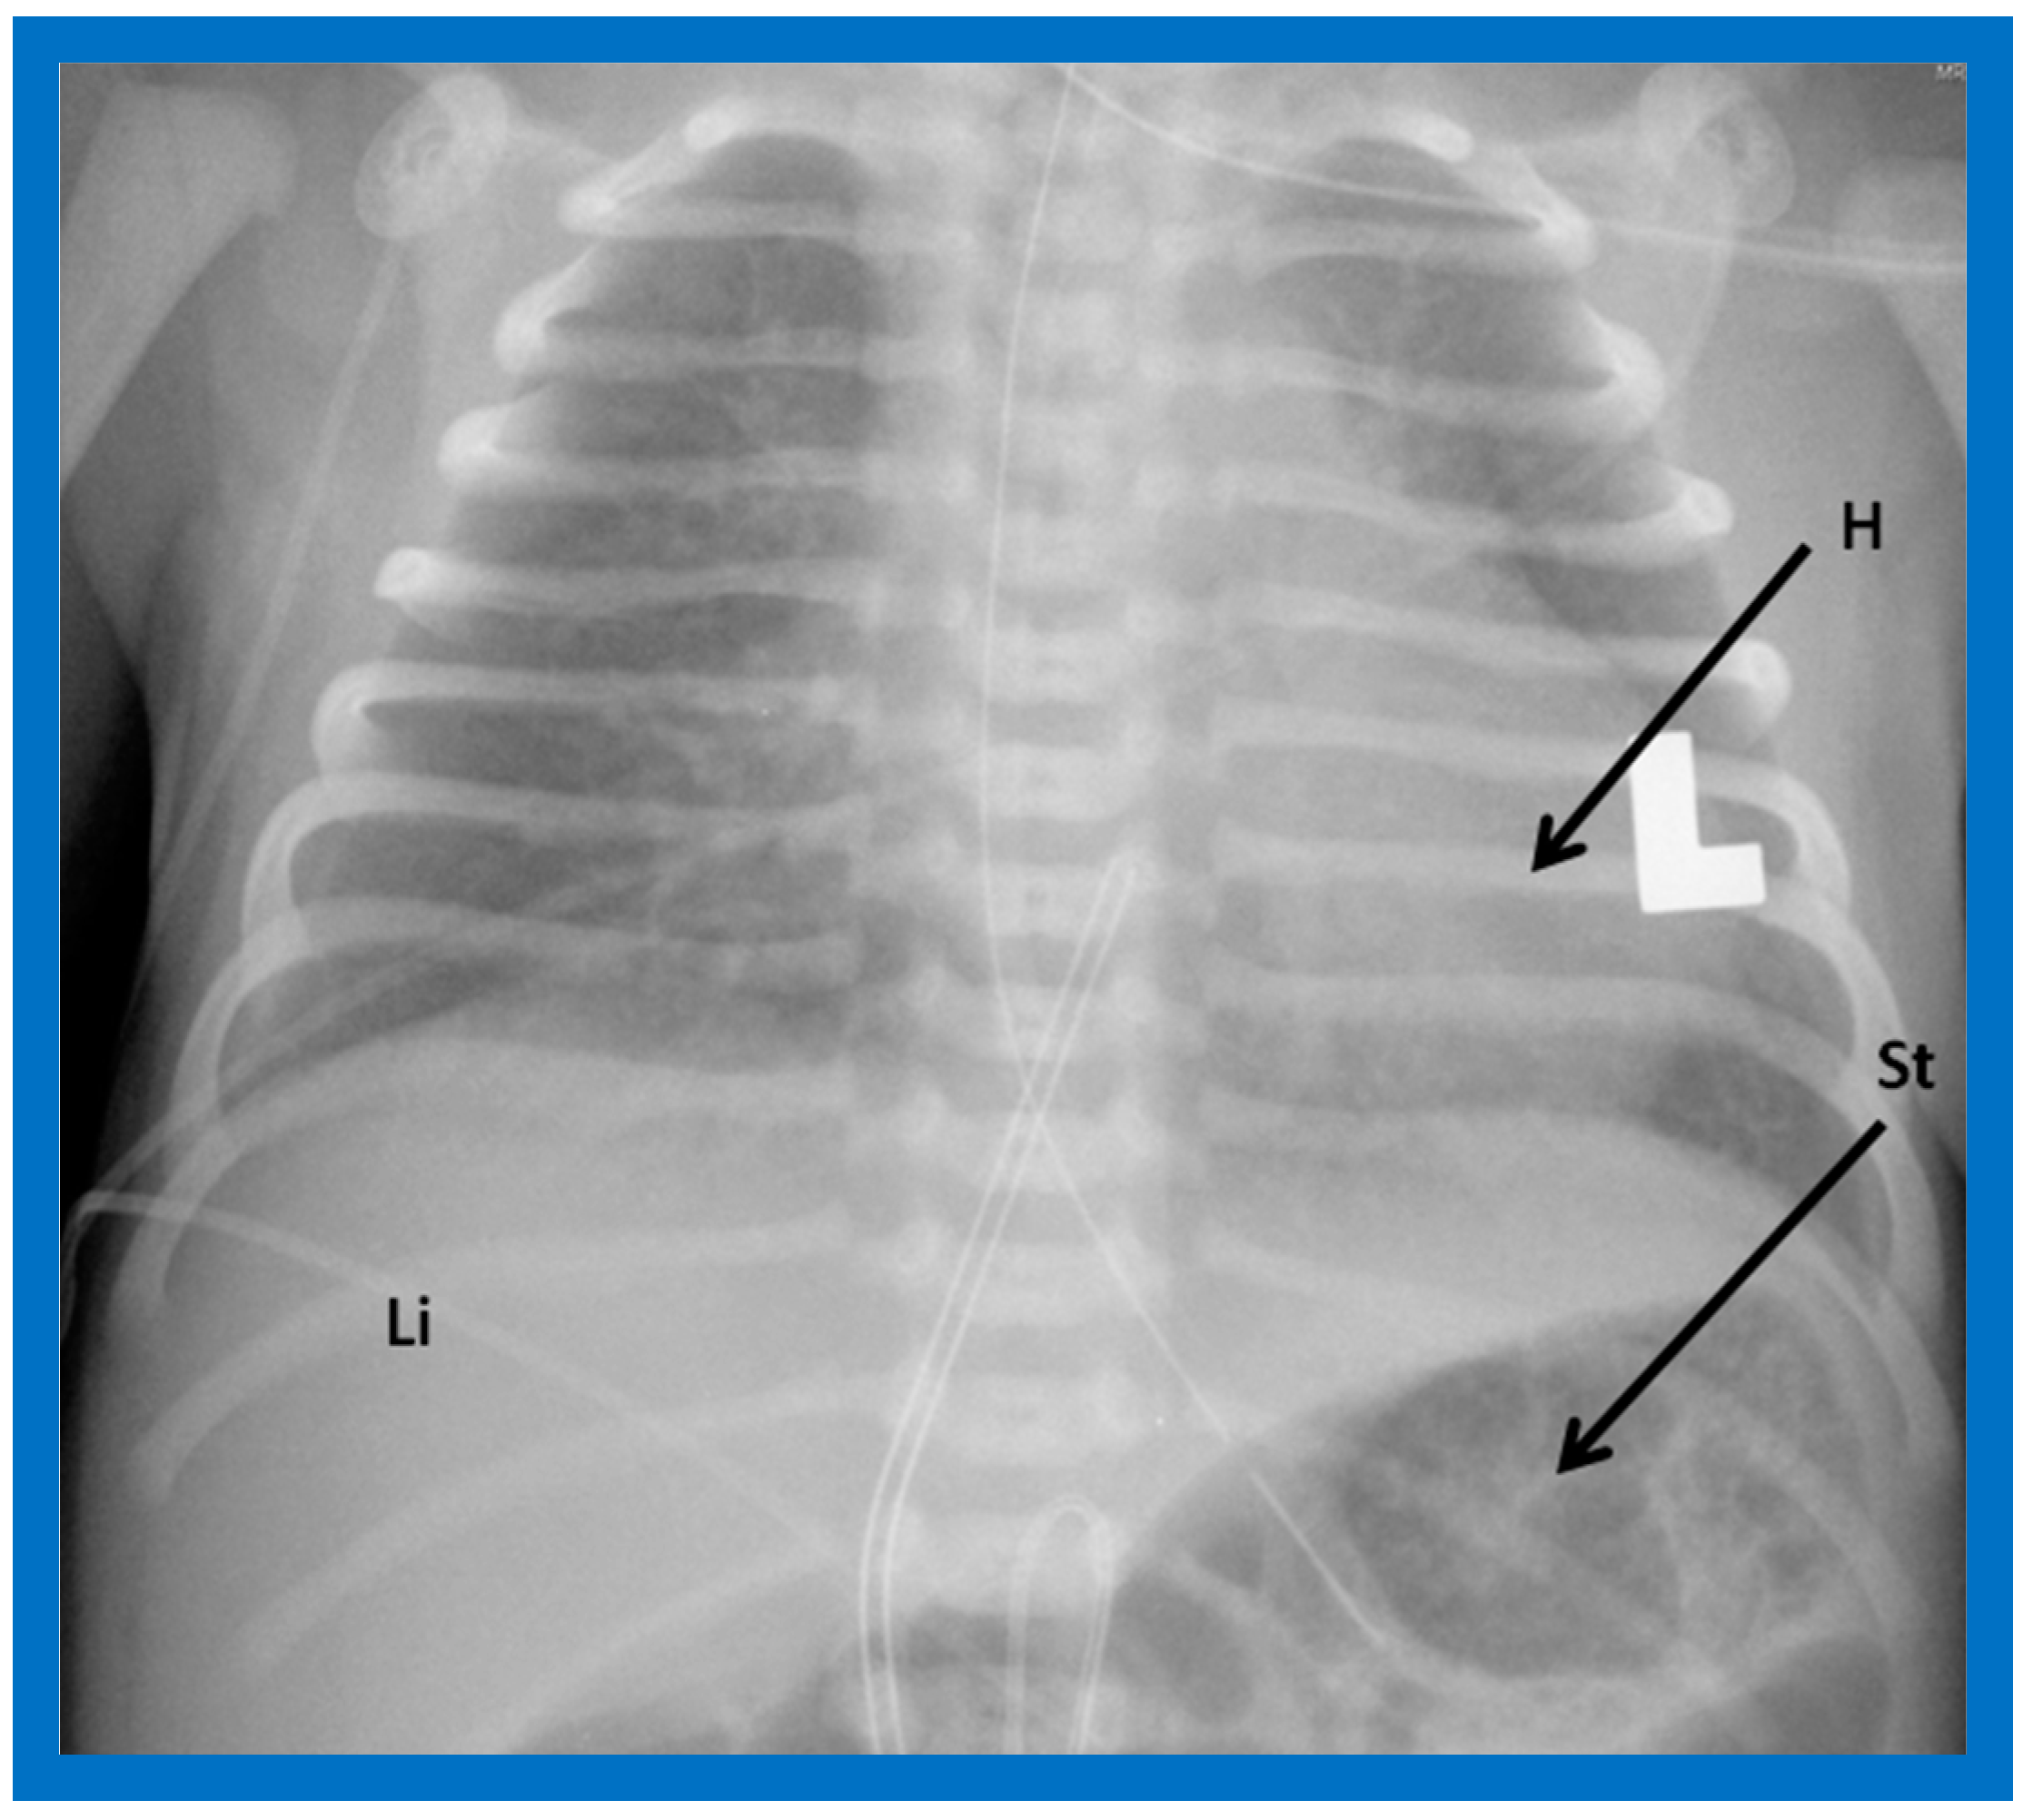 Closed drainage system with a tubular chest tube. A: Tubular chest tube